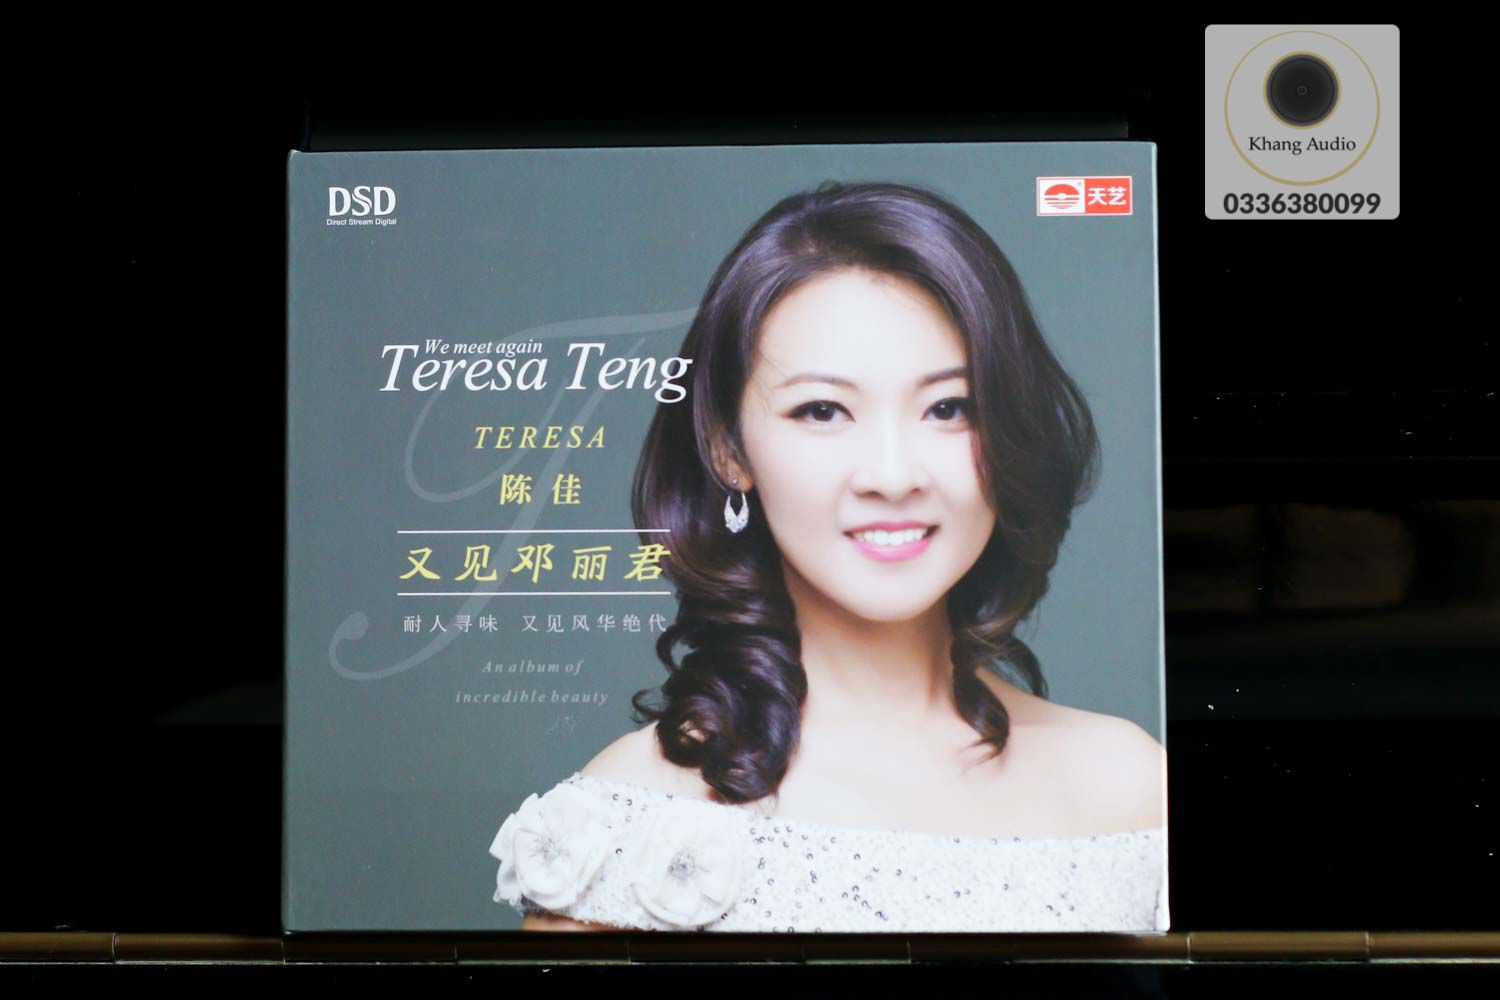 Teresa Teng - We Meet Again HQ Khang Audio 0336380099